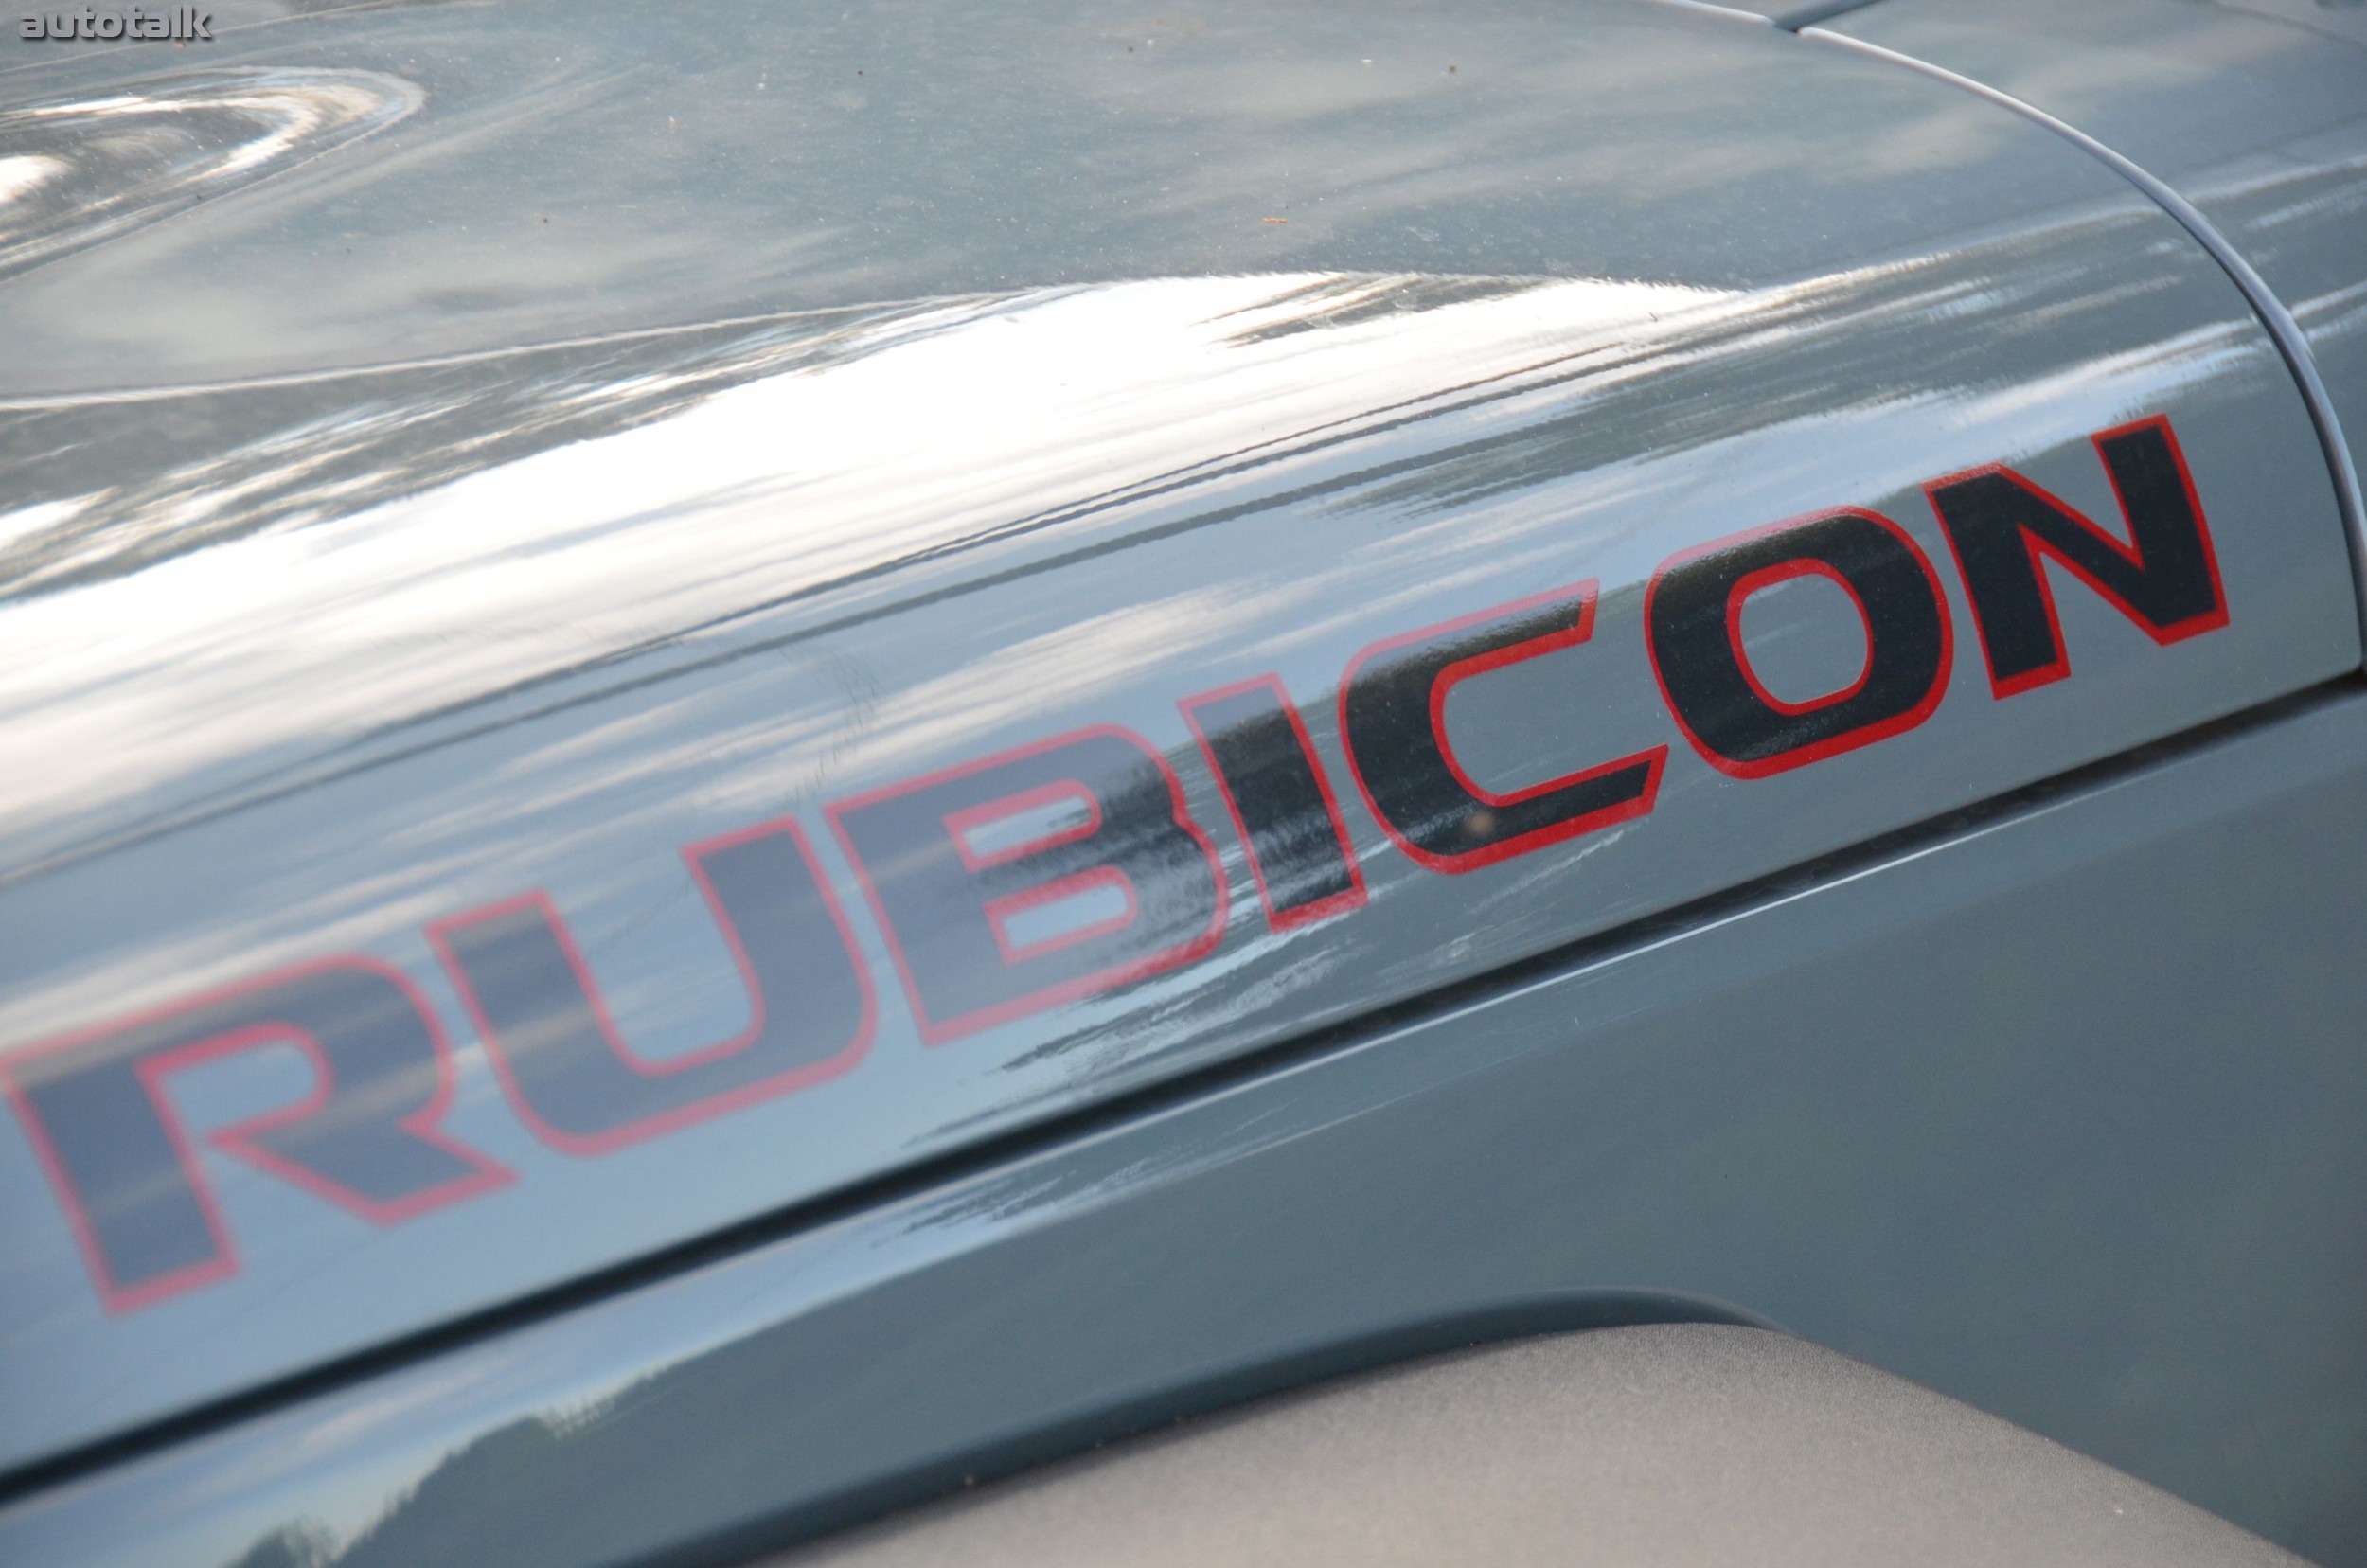 2014 Jeep Wrangler Rubicon Review